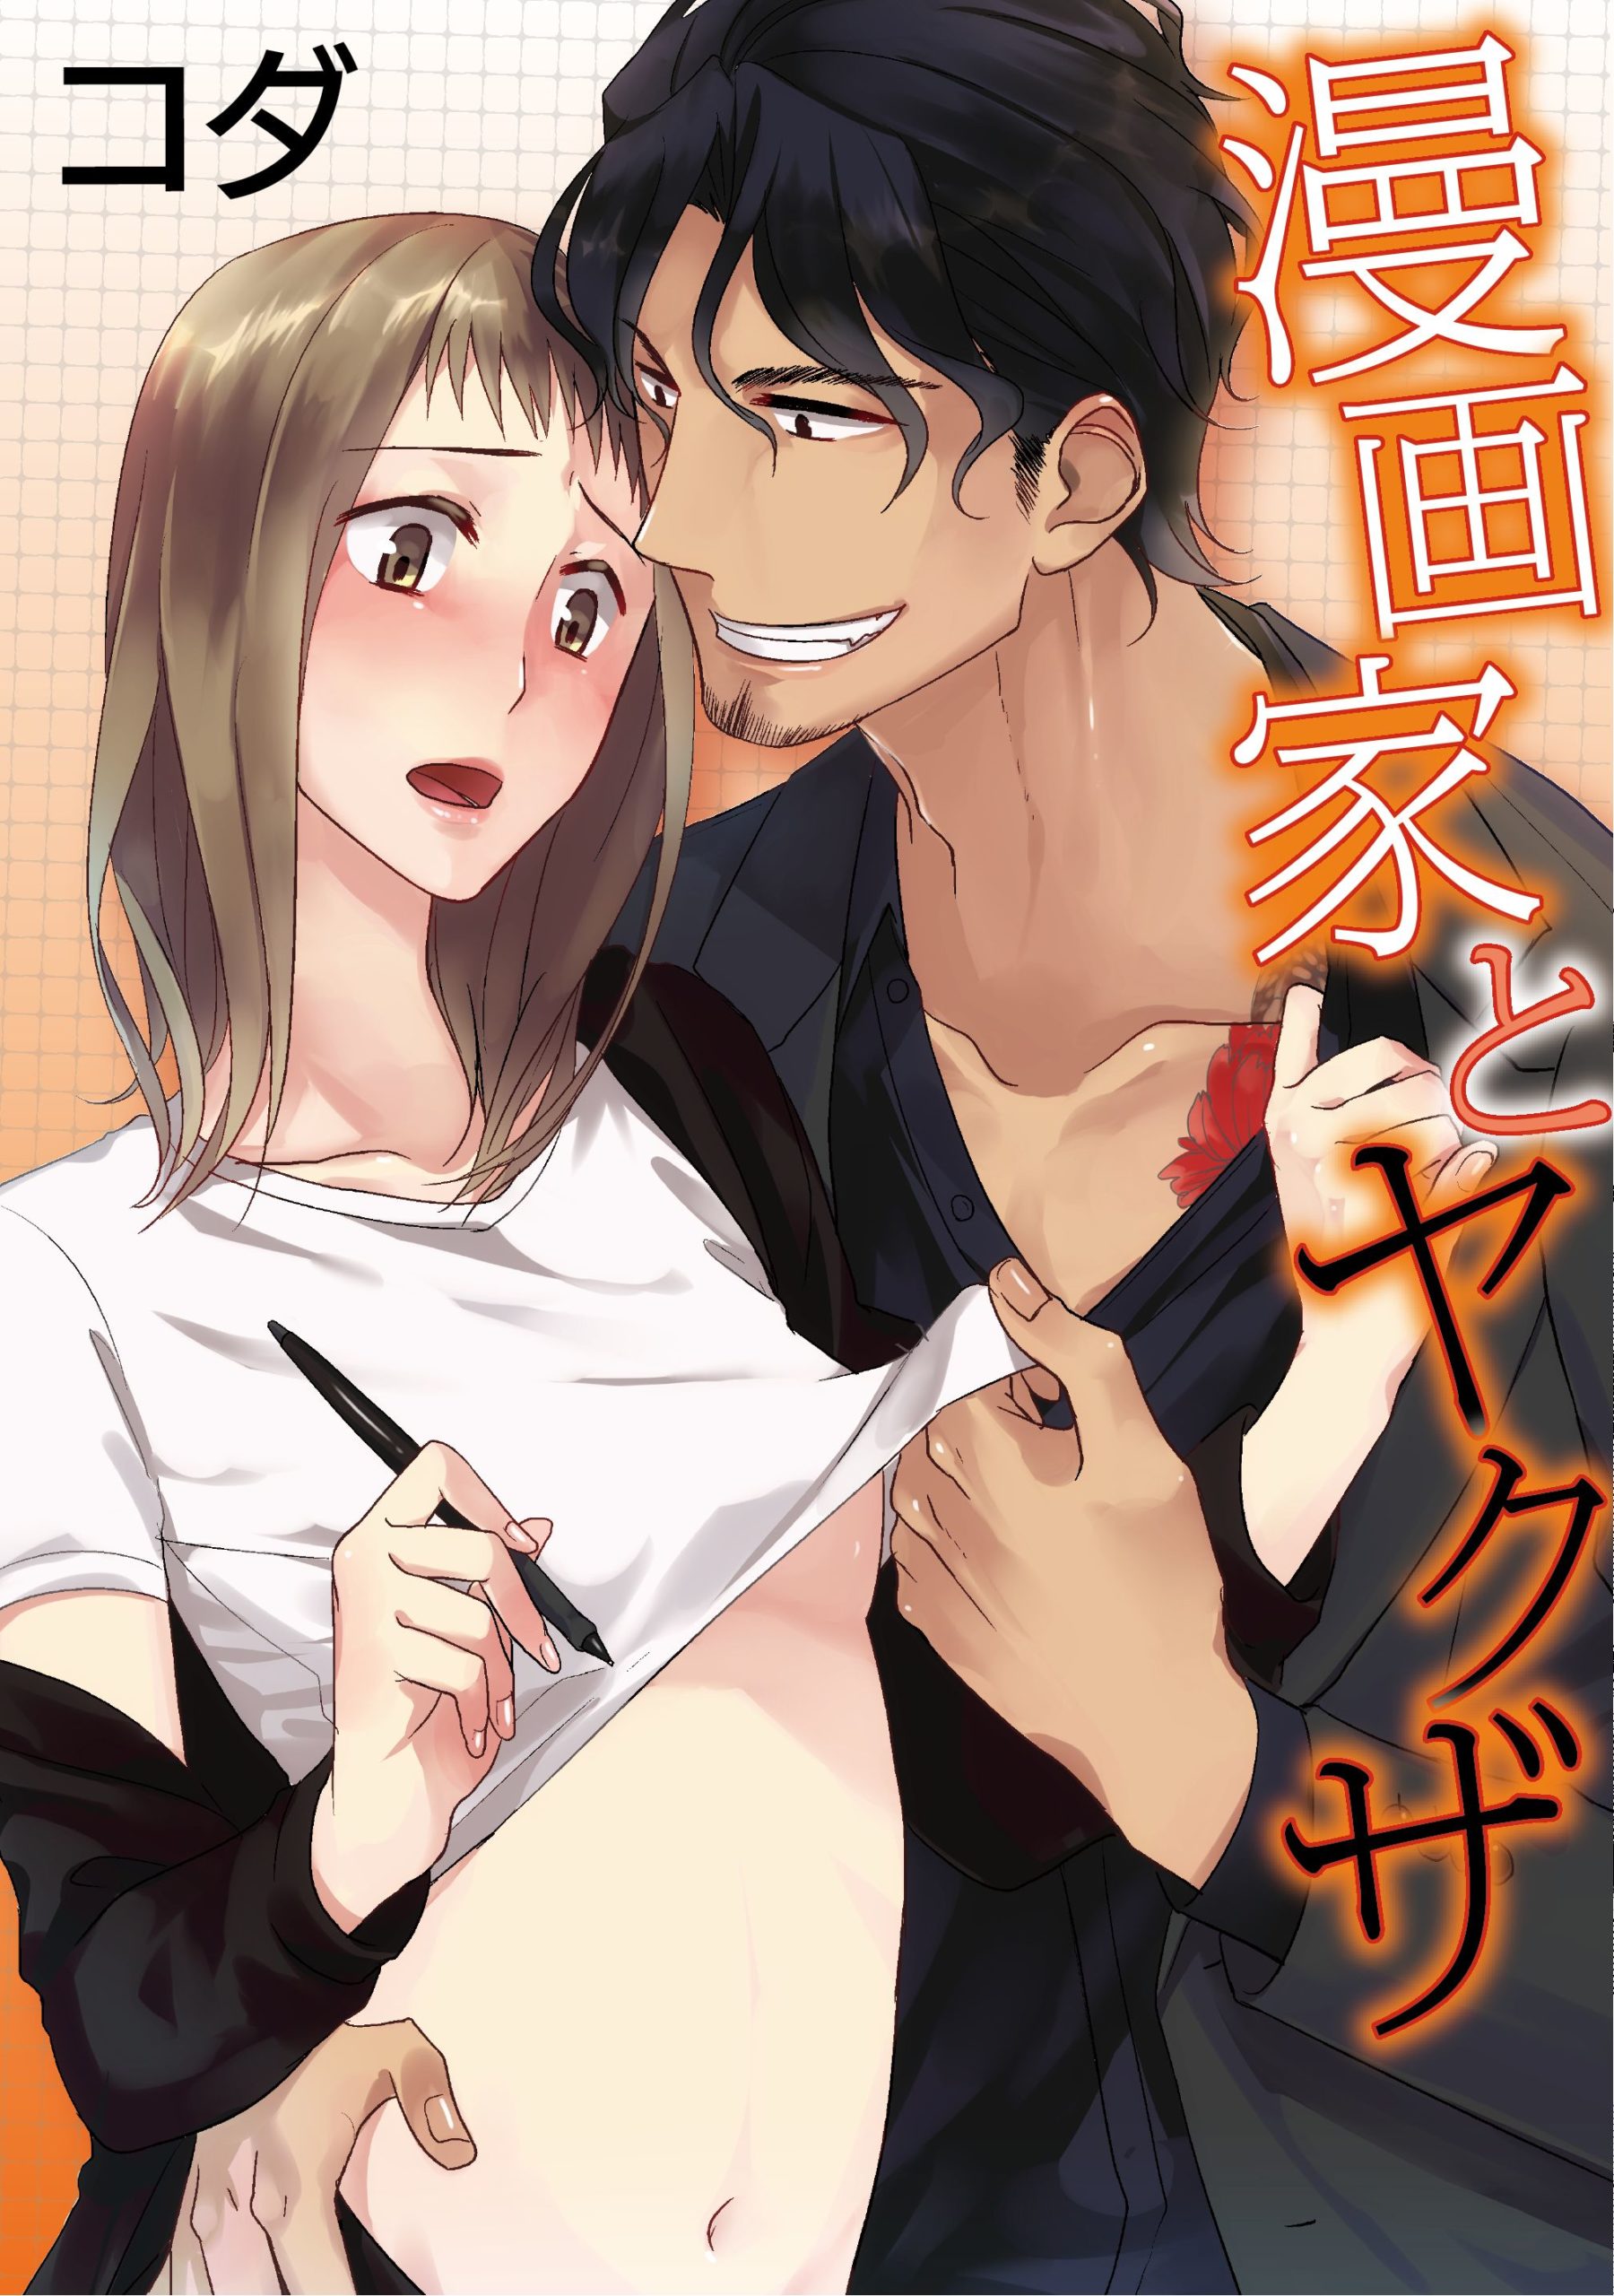 Popular erotic manga